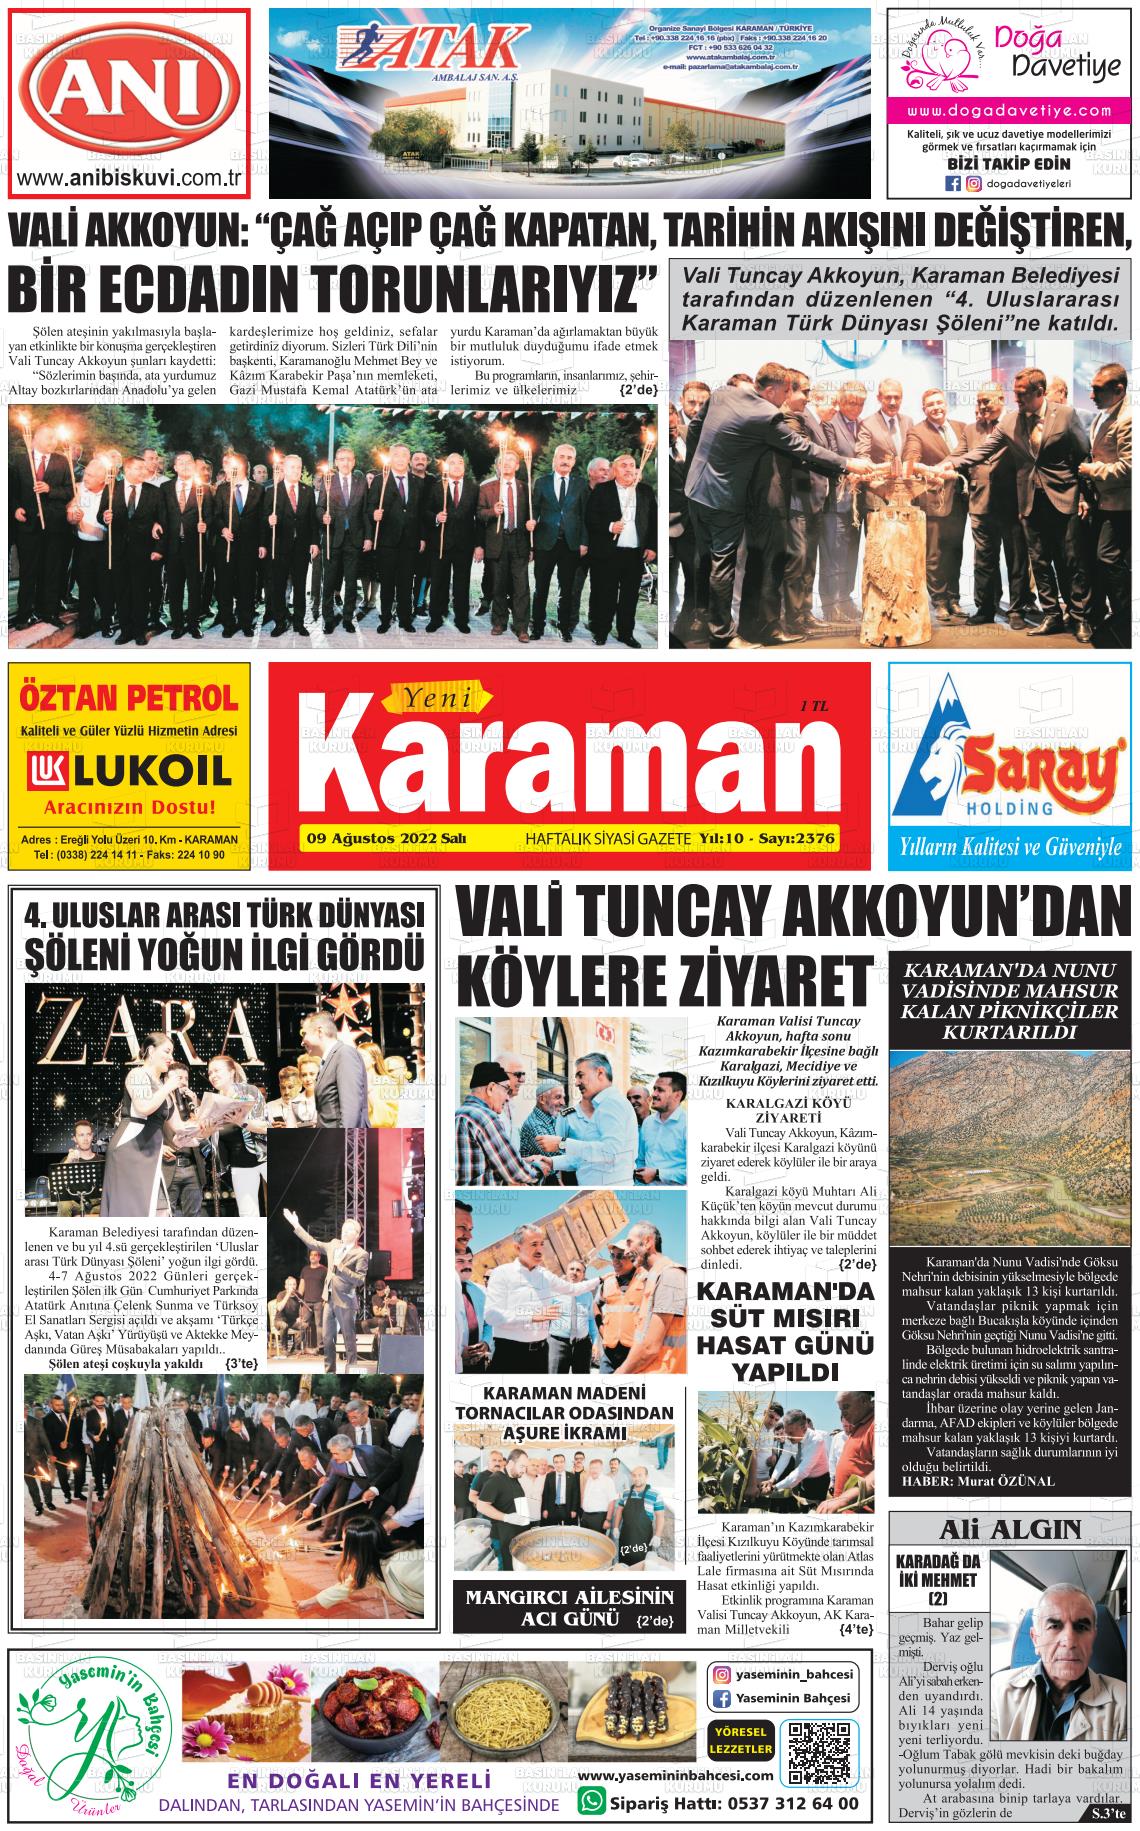 09 Ağustos 2022 Yeni Karaman Gazete Manşeti